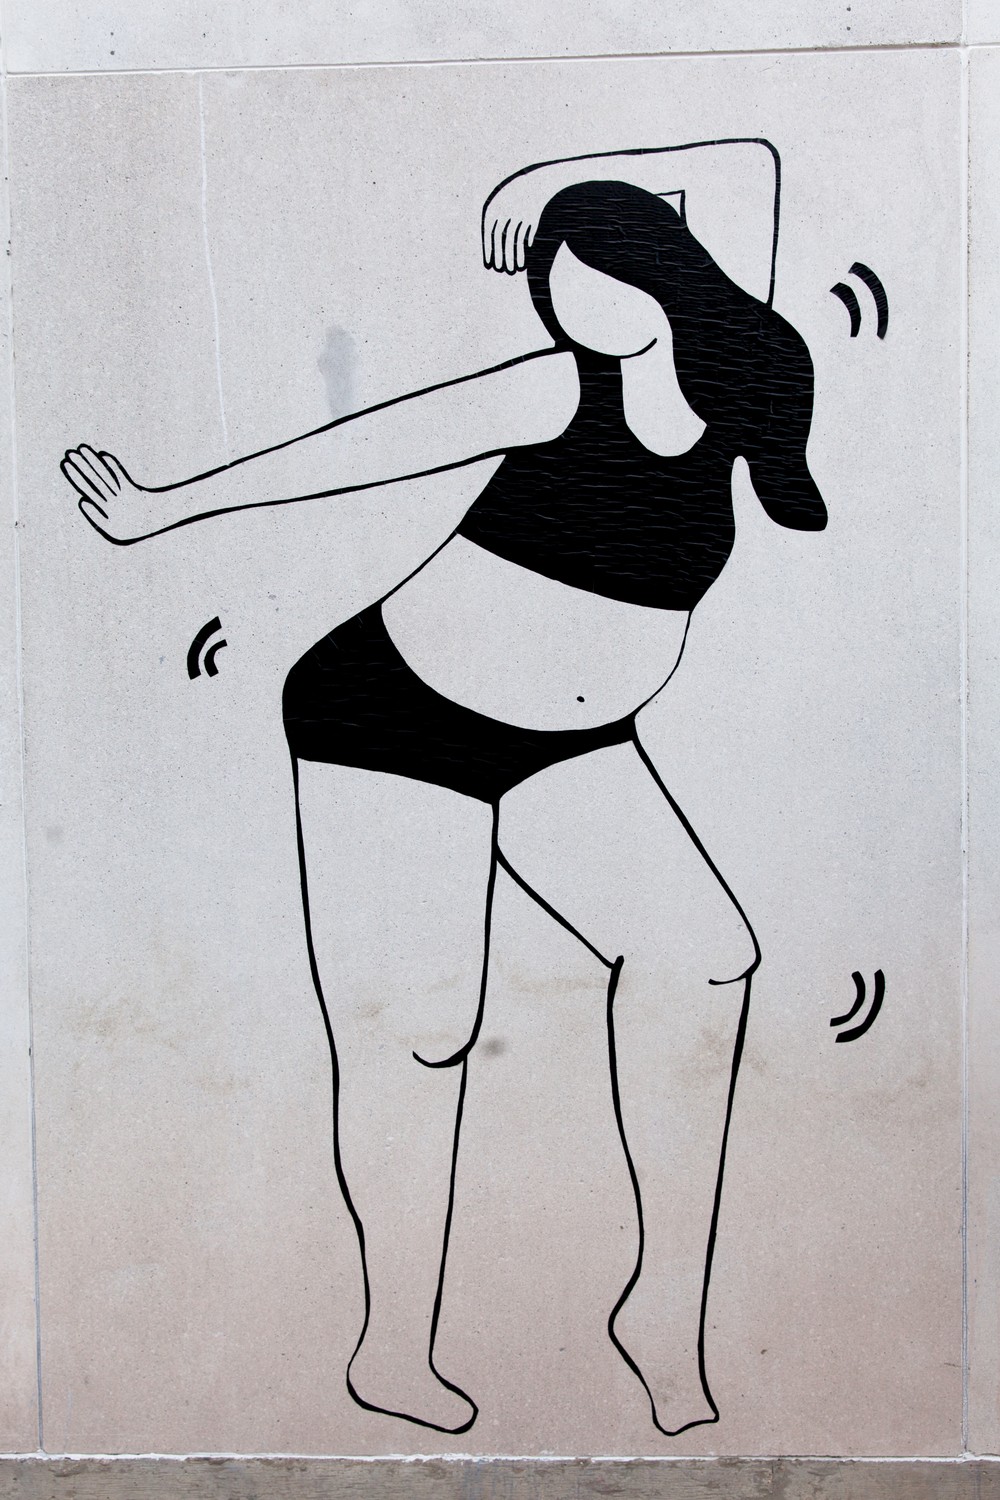 Image of single woman in mural dancing in underwear. 